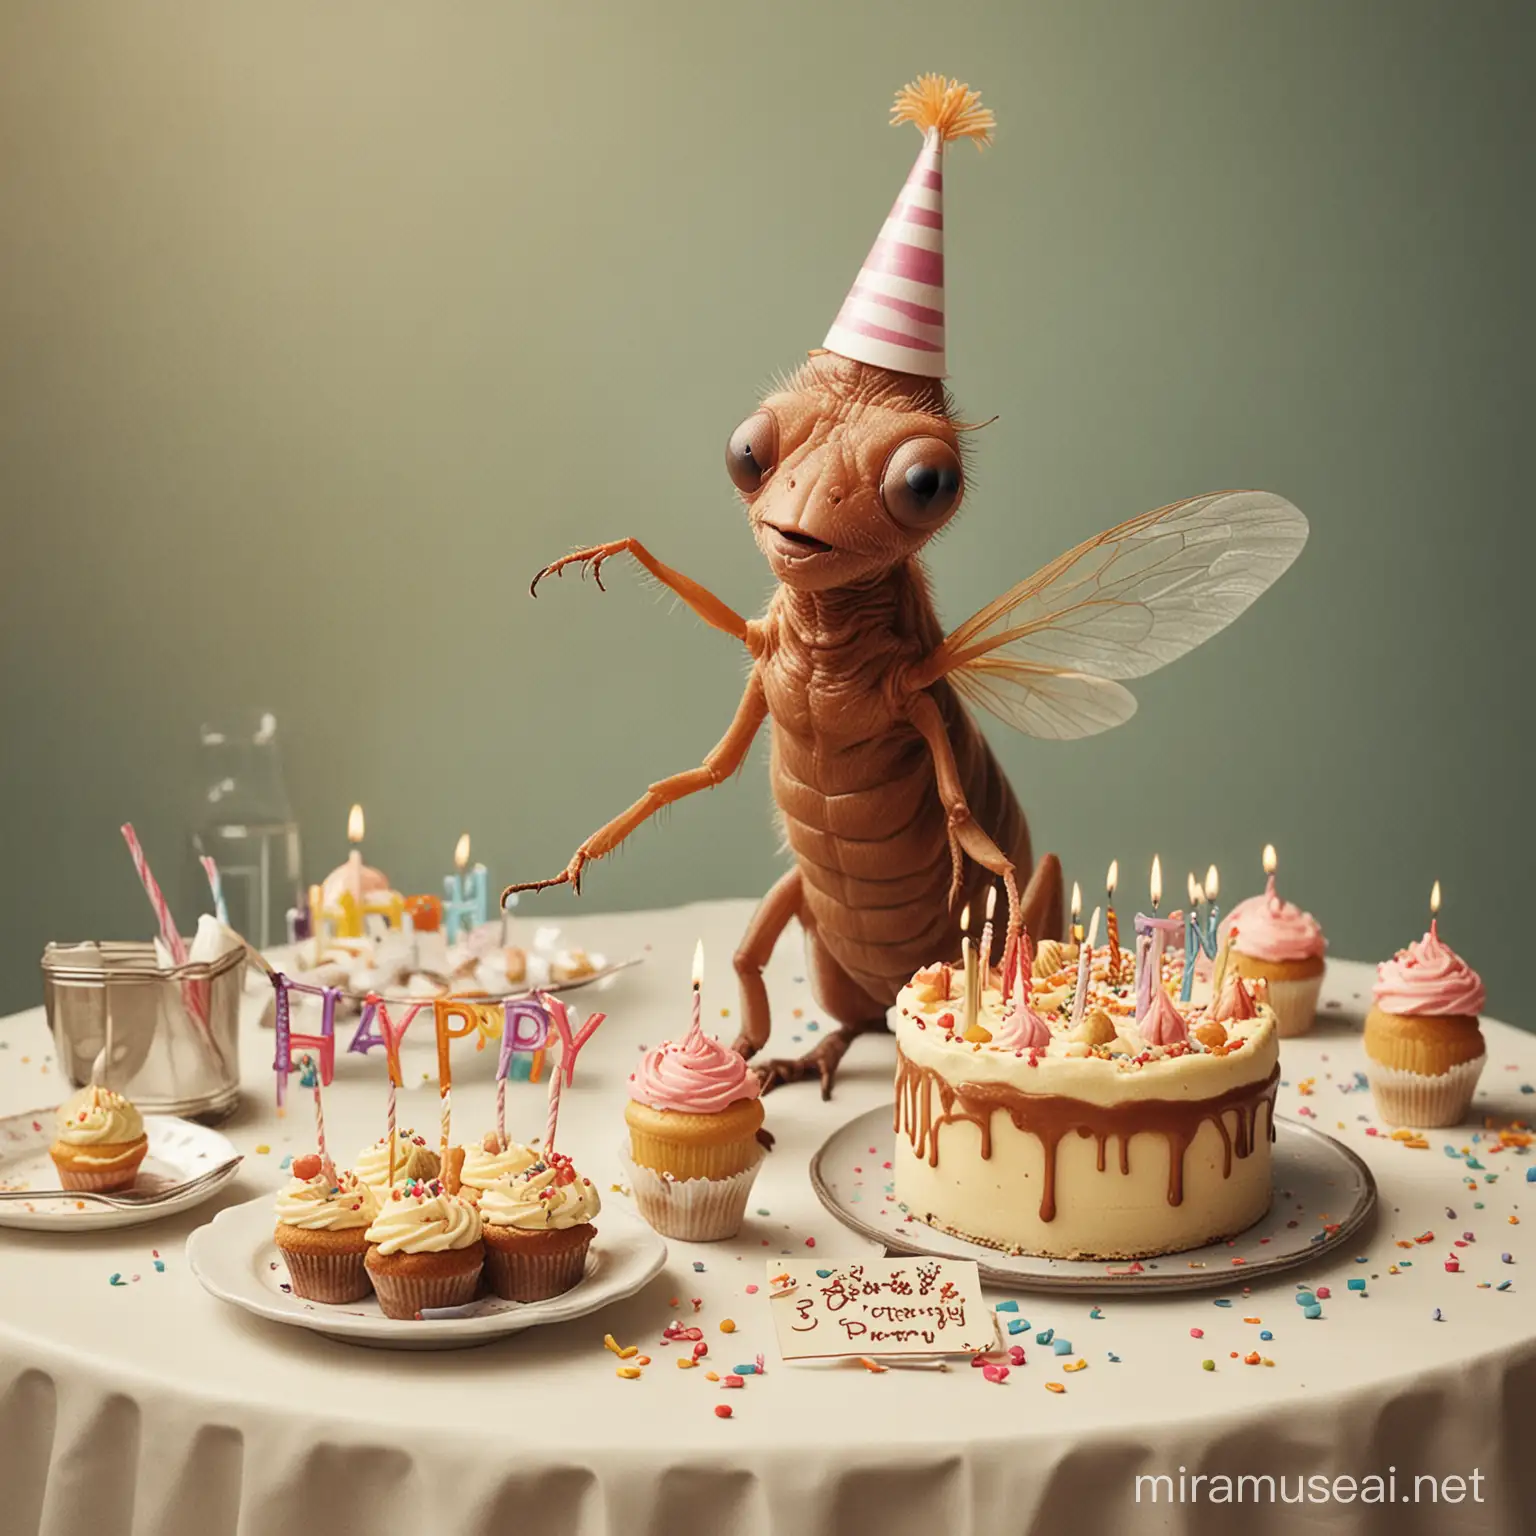 Joyful Flea Birthday Celebration with Party Hats and Cake